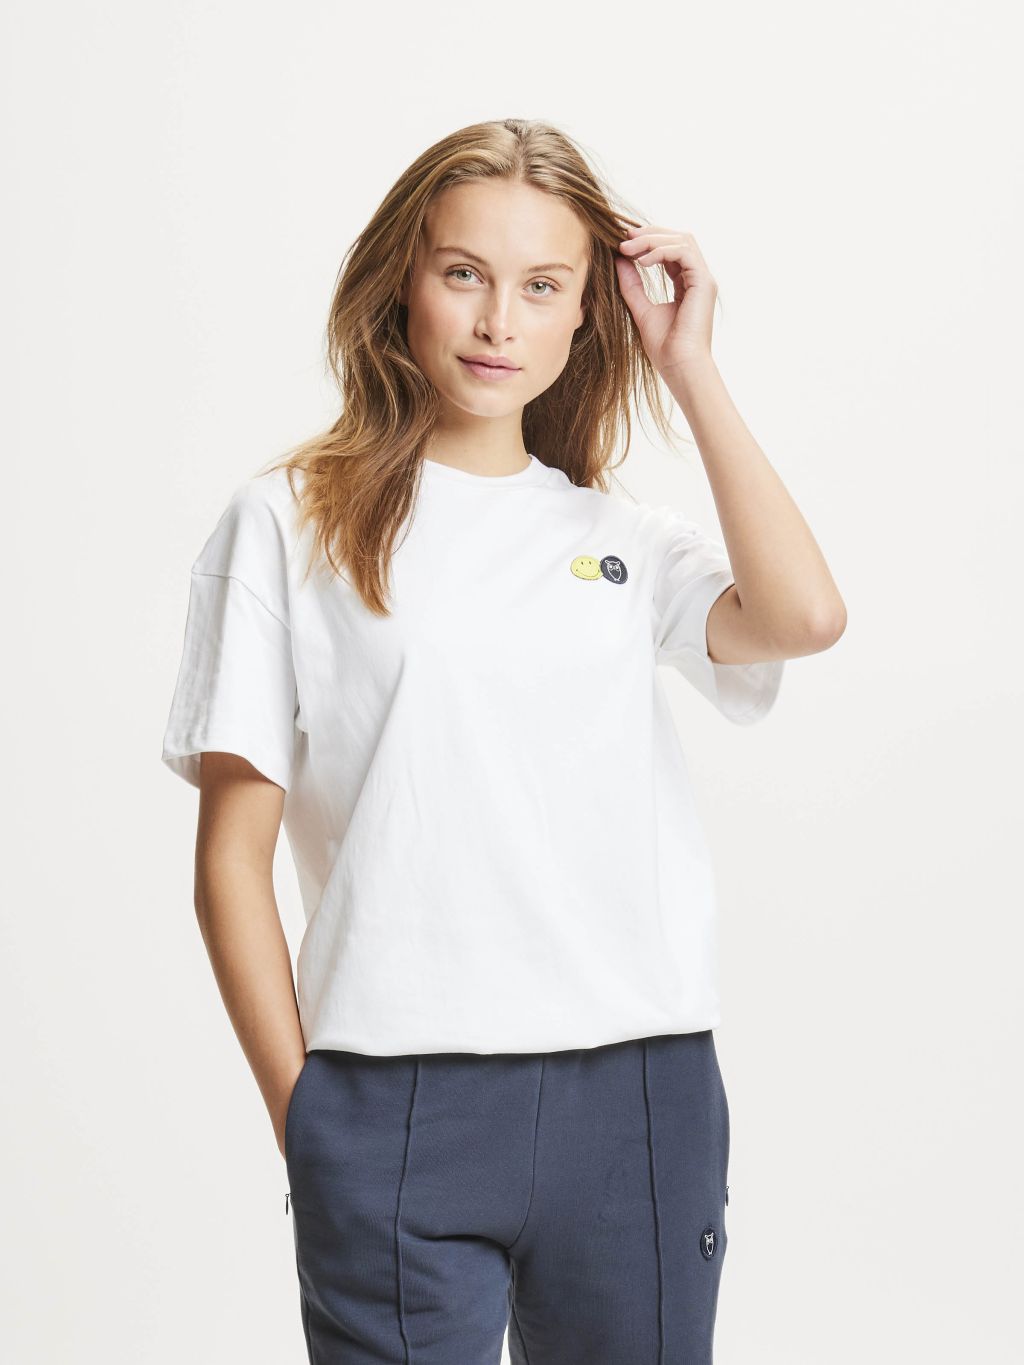 Kca X Smiley® Badge T-Shirt Women - Gots/Vegan - Bright White L